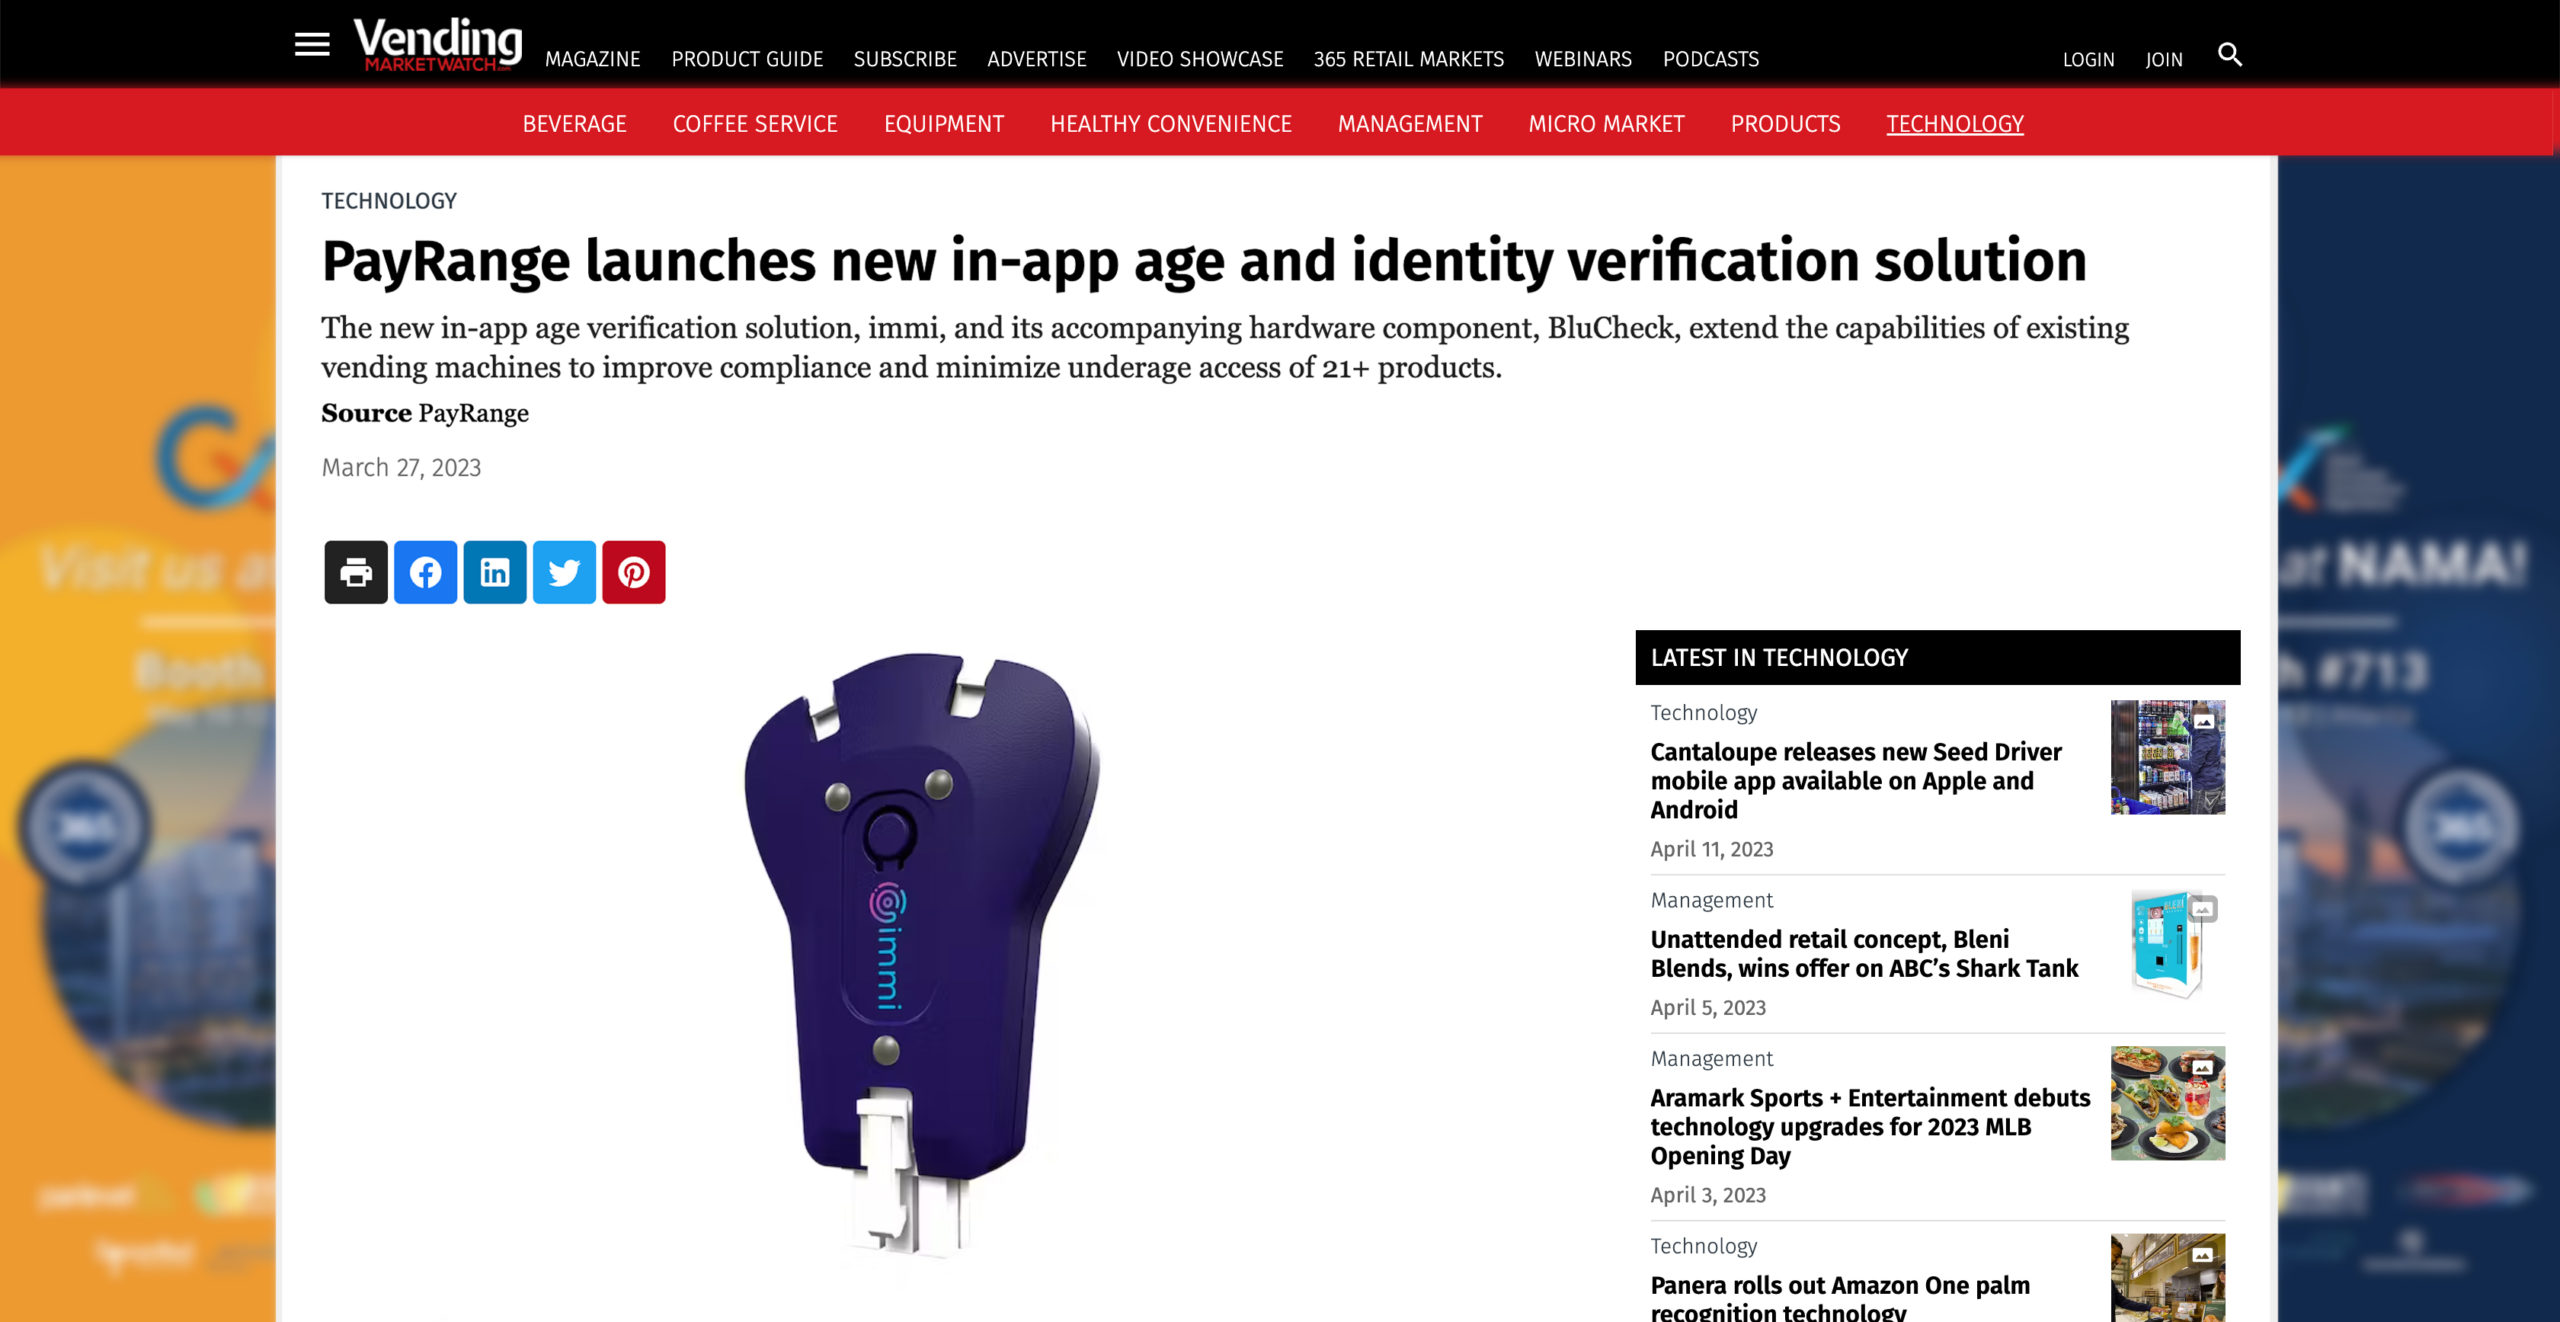 BluCheck Identity and Age Verification